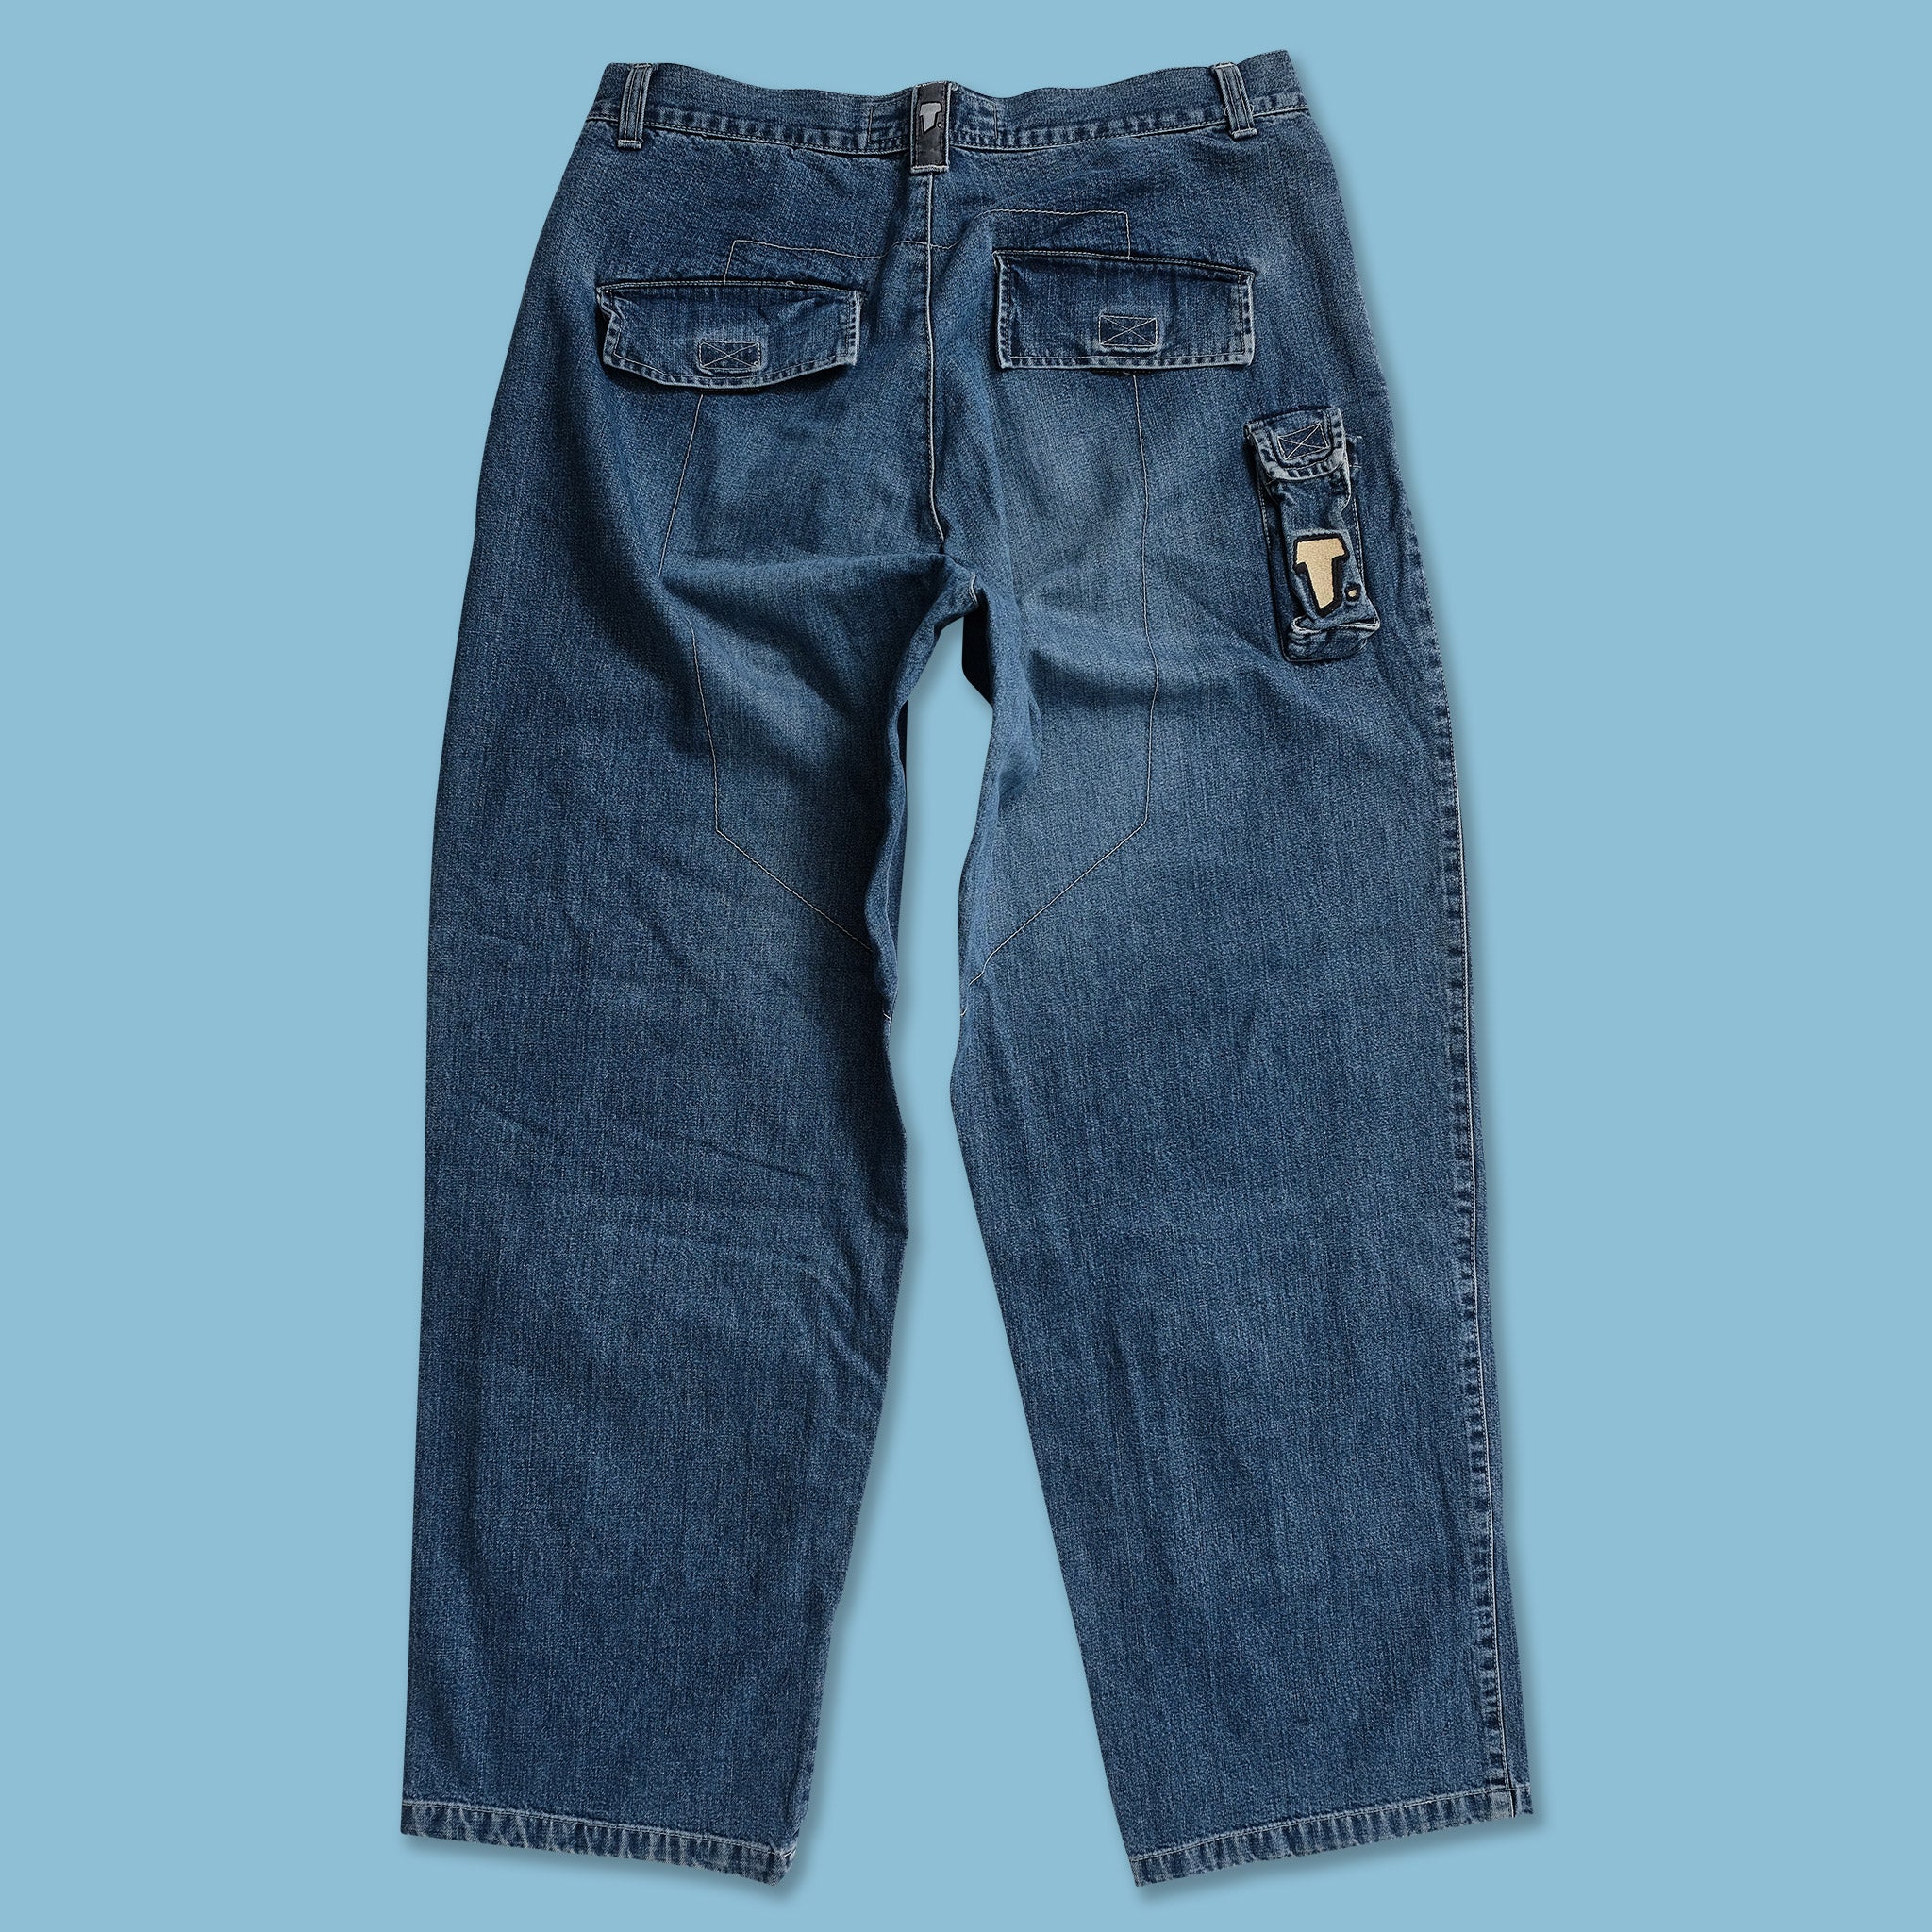 Freeman | Double Double Porter T. Baggy Y2K Vintage Jeans 35x32